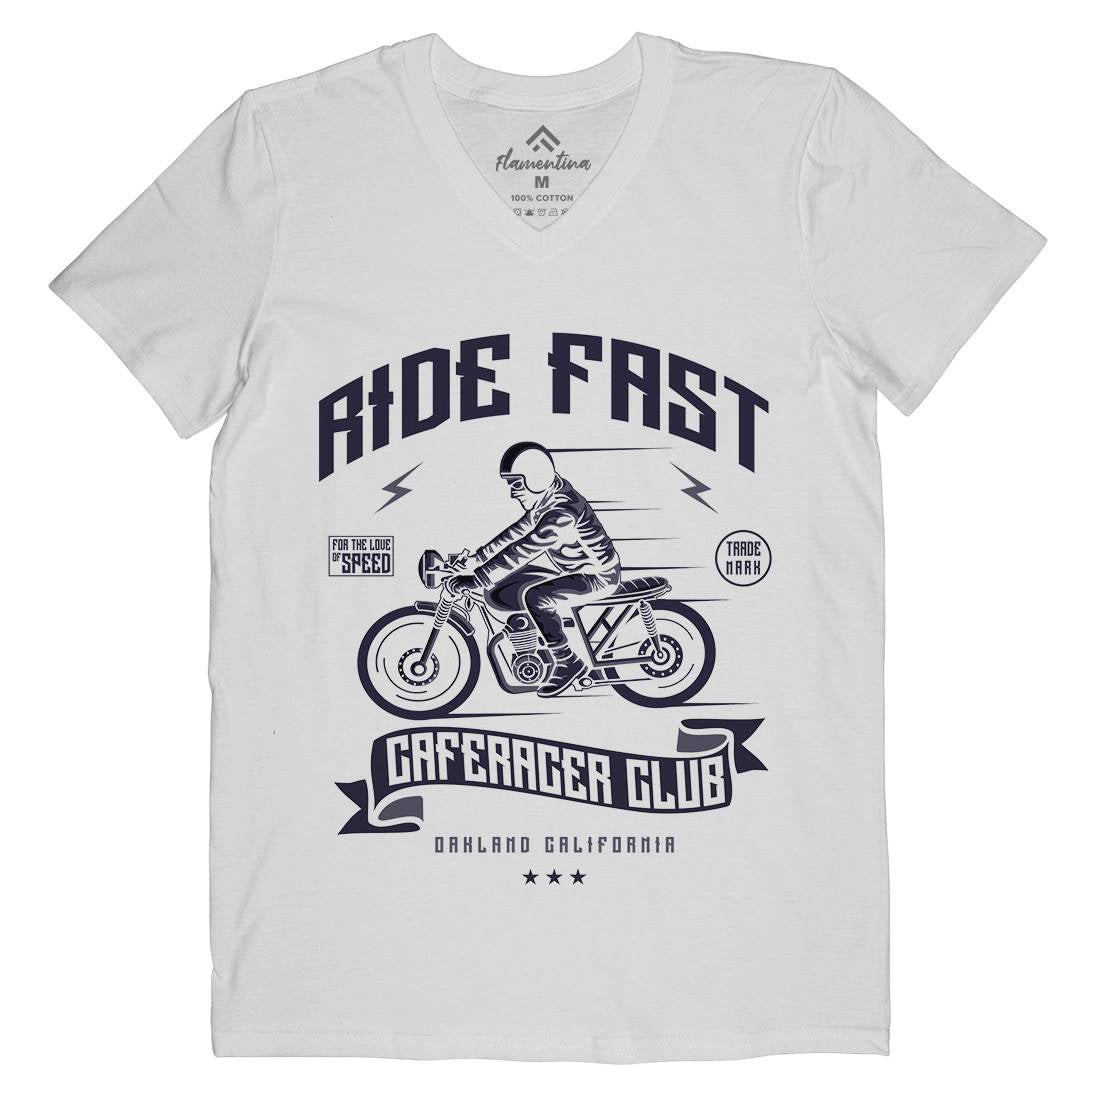 Ride Fast Mens V-Neck T-Shirt Motorcycles A117